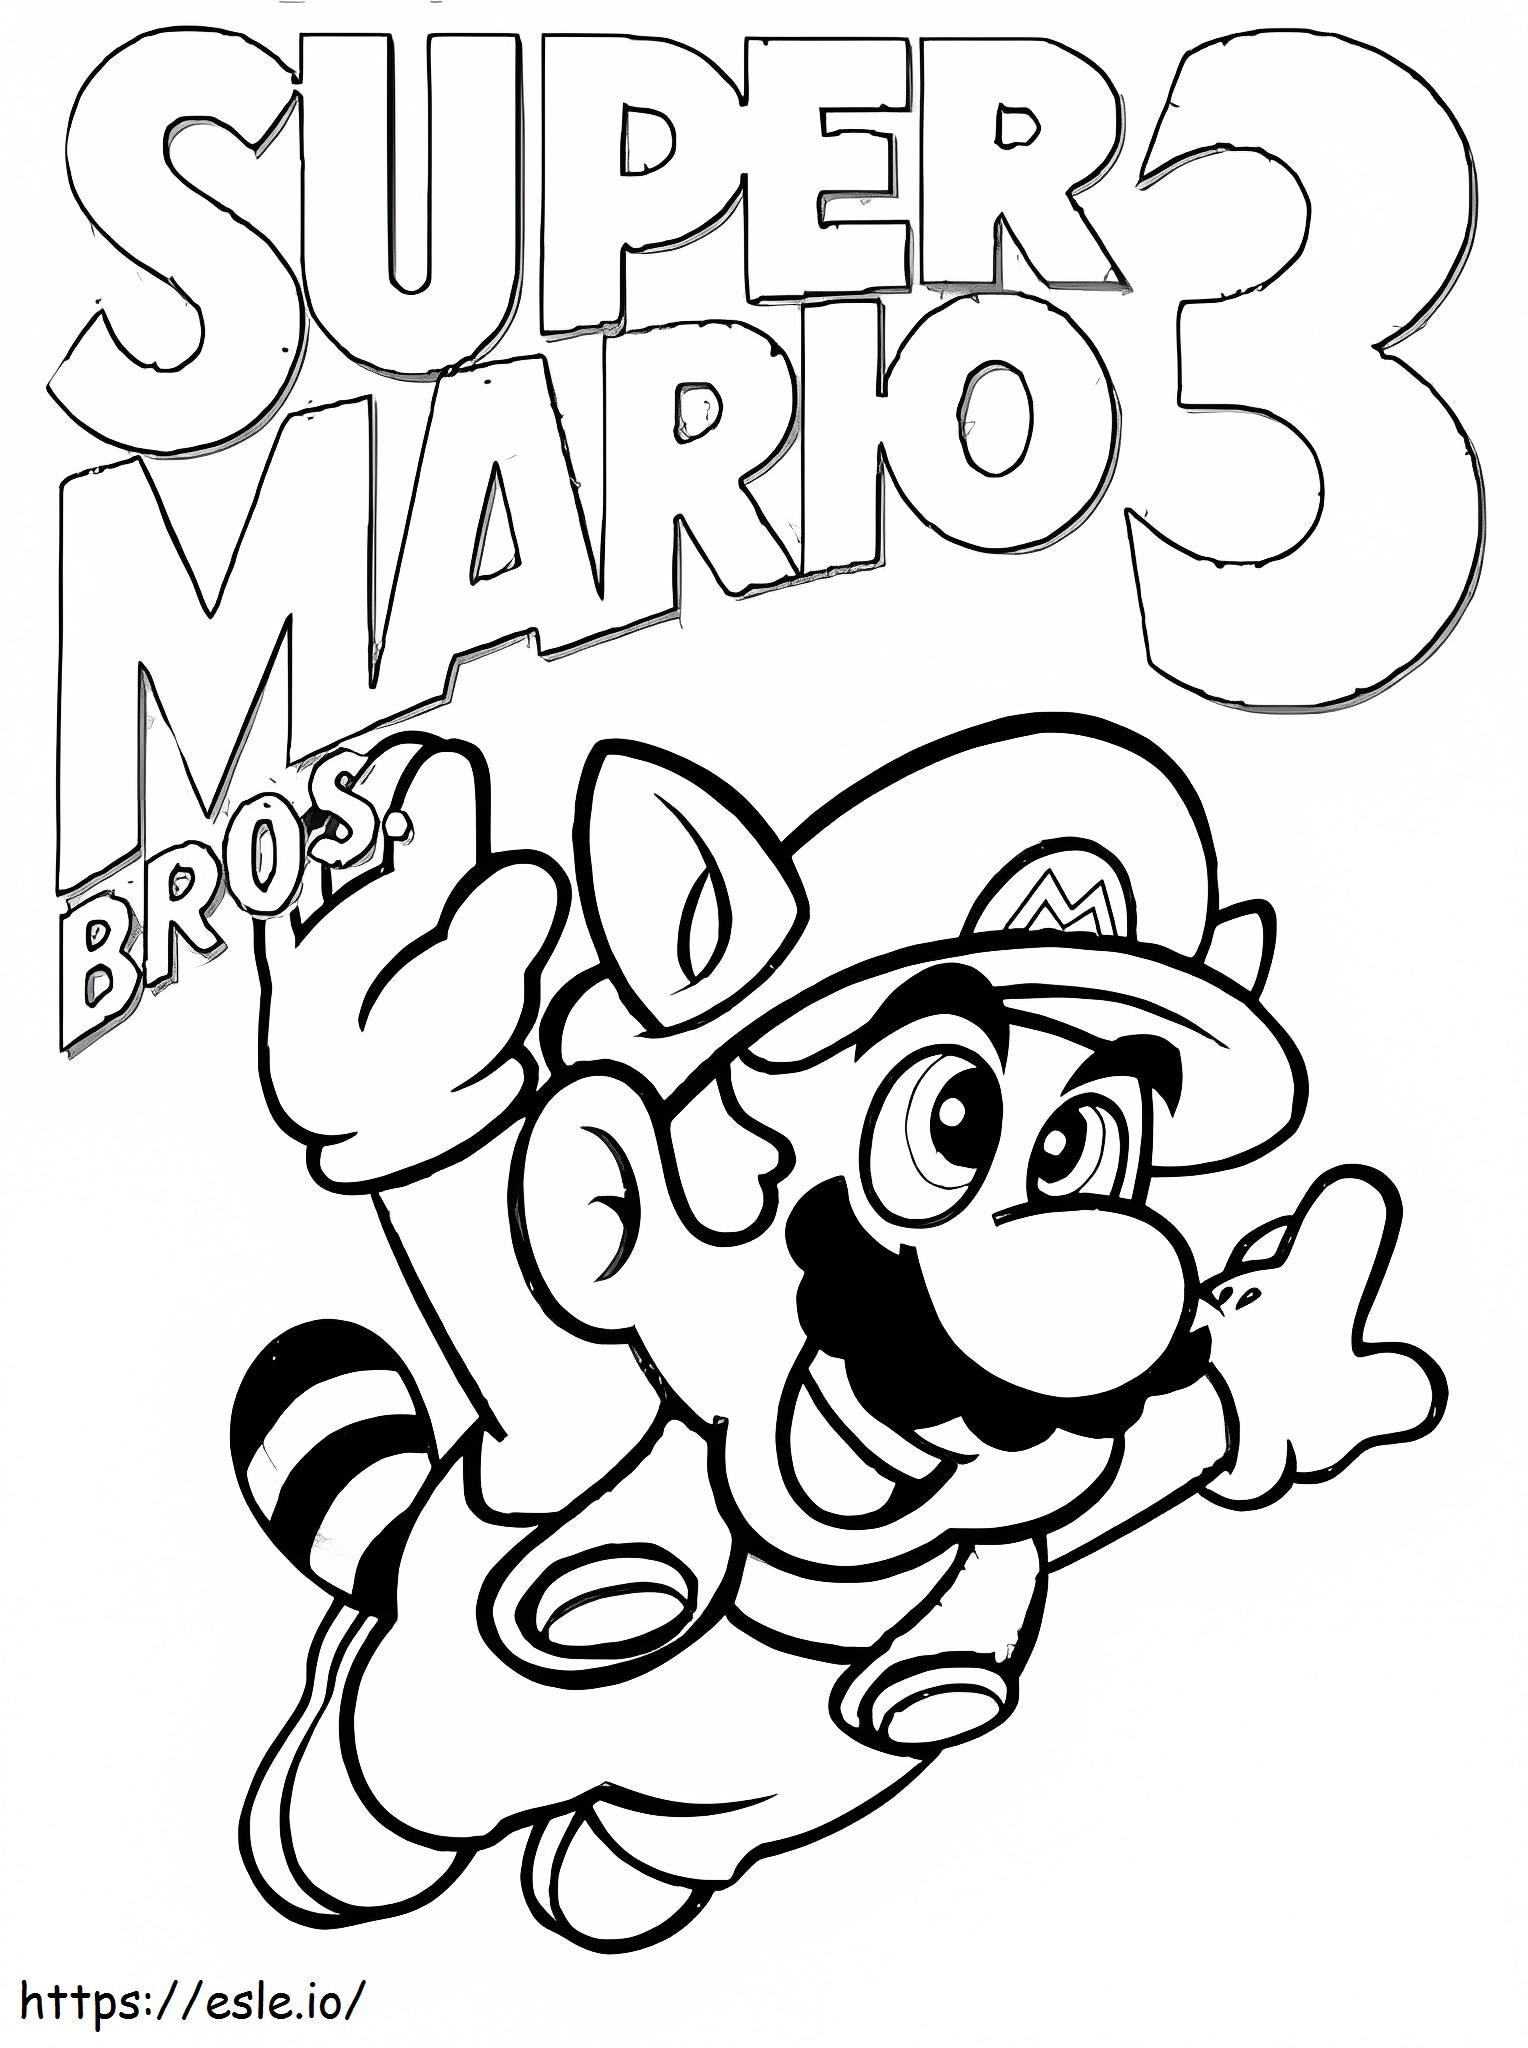 Super Mario 3 kolorowanka